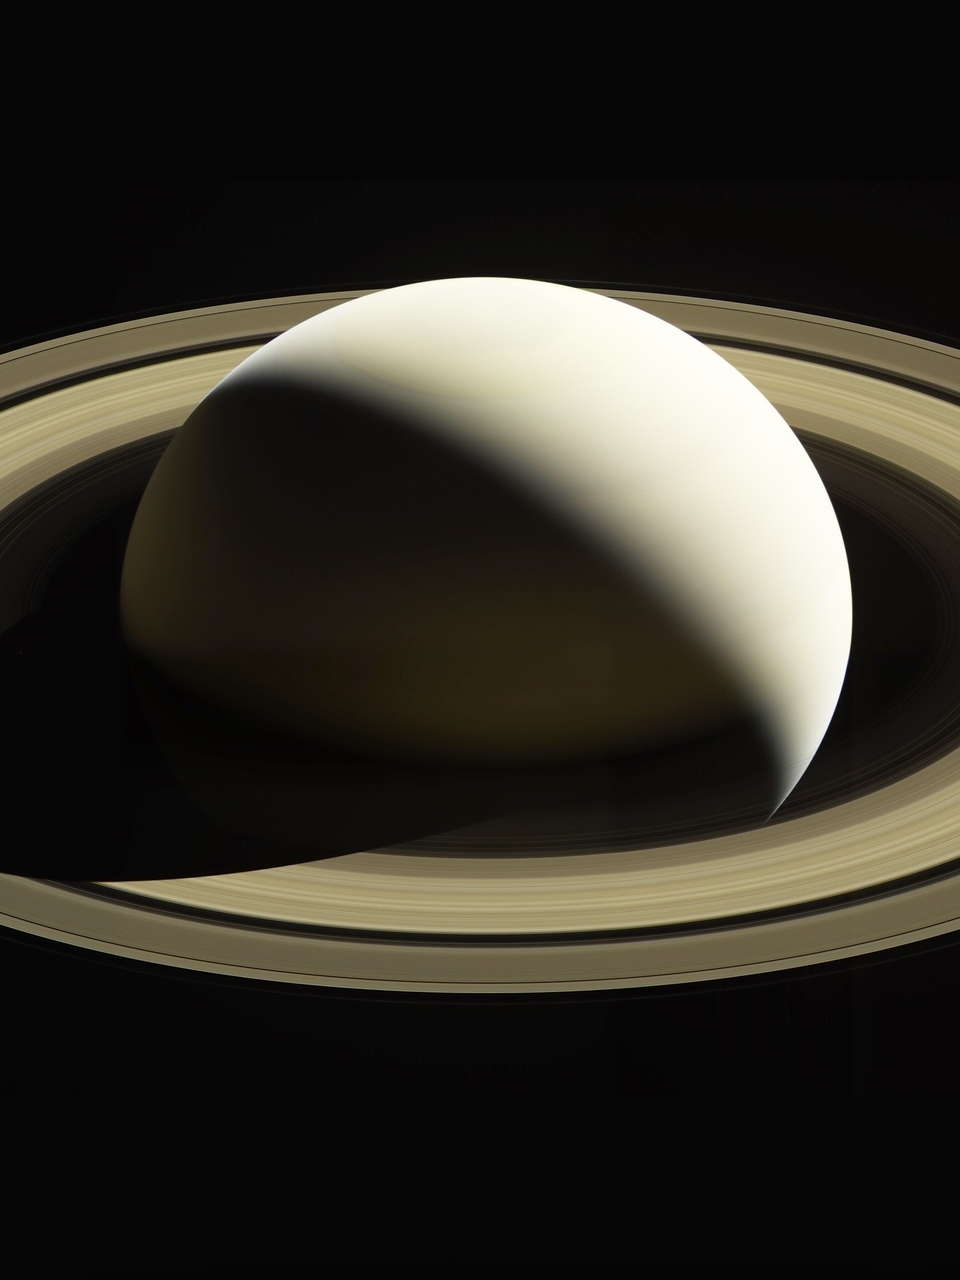 Image: Planet, giant, Saturn, rings, shadow, lighting, space